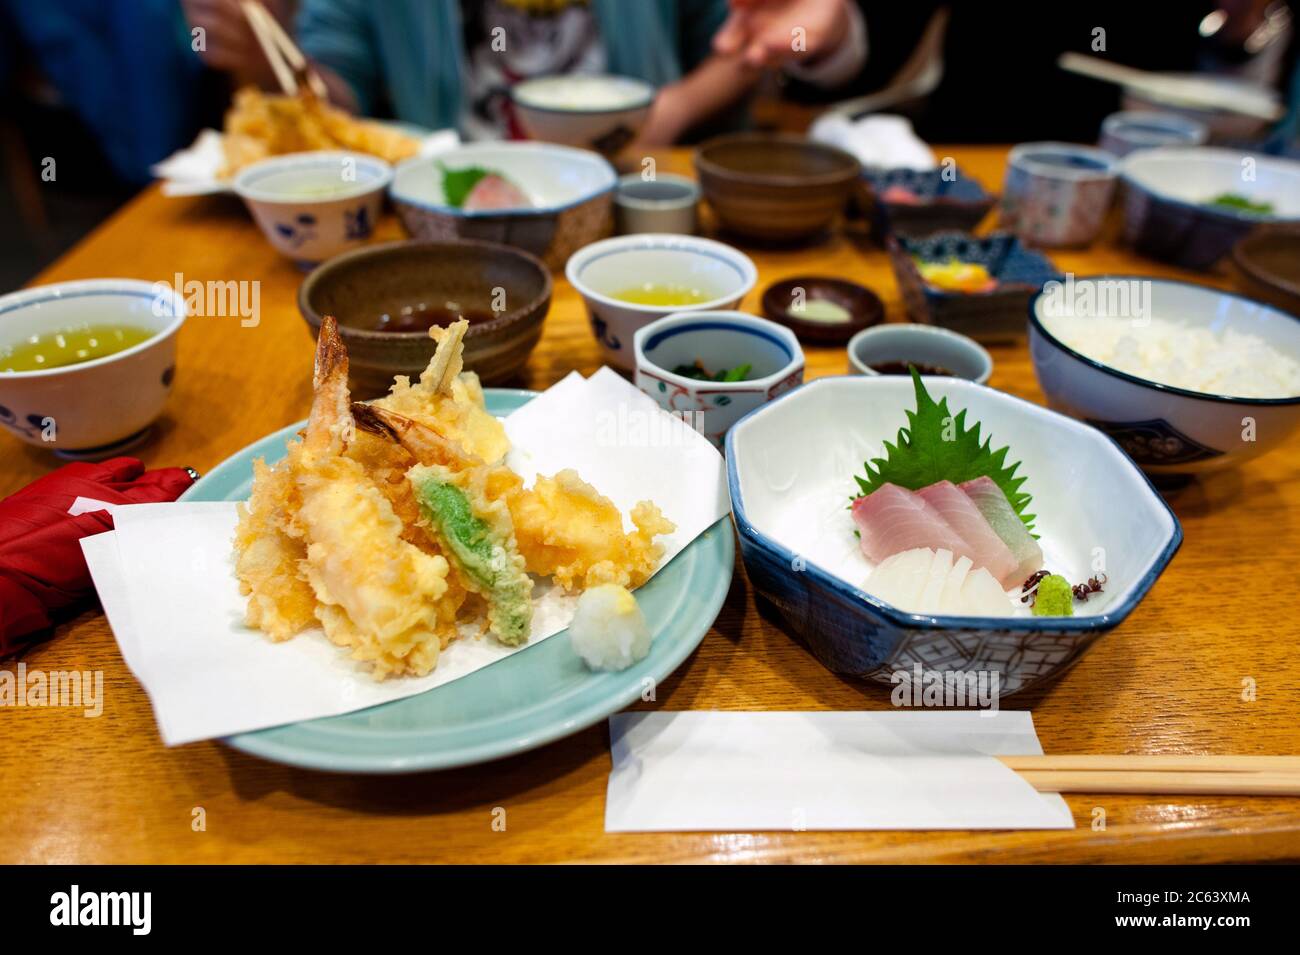 Shrimp tempura, sashimi, and other dishes are a set of Japanese dishes. Stock Photo